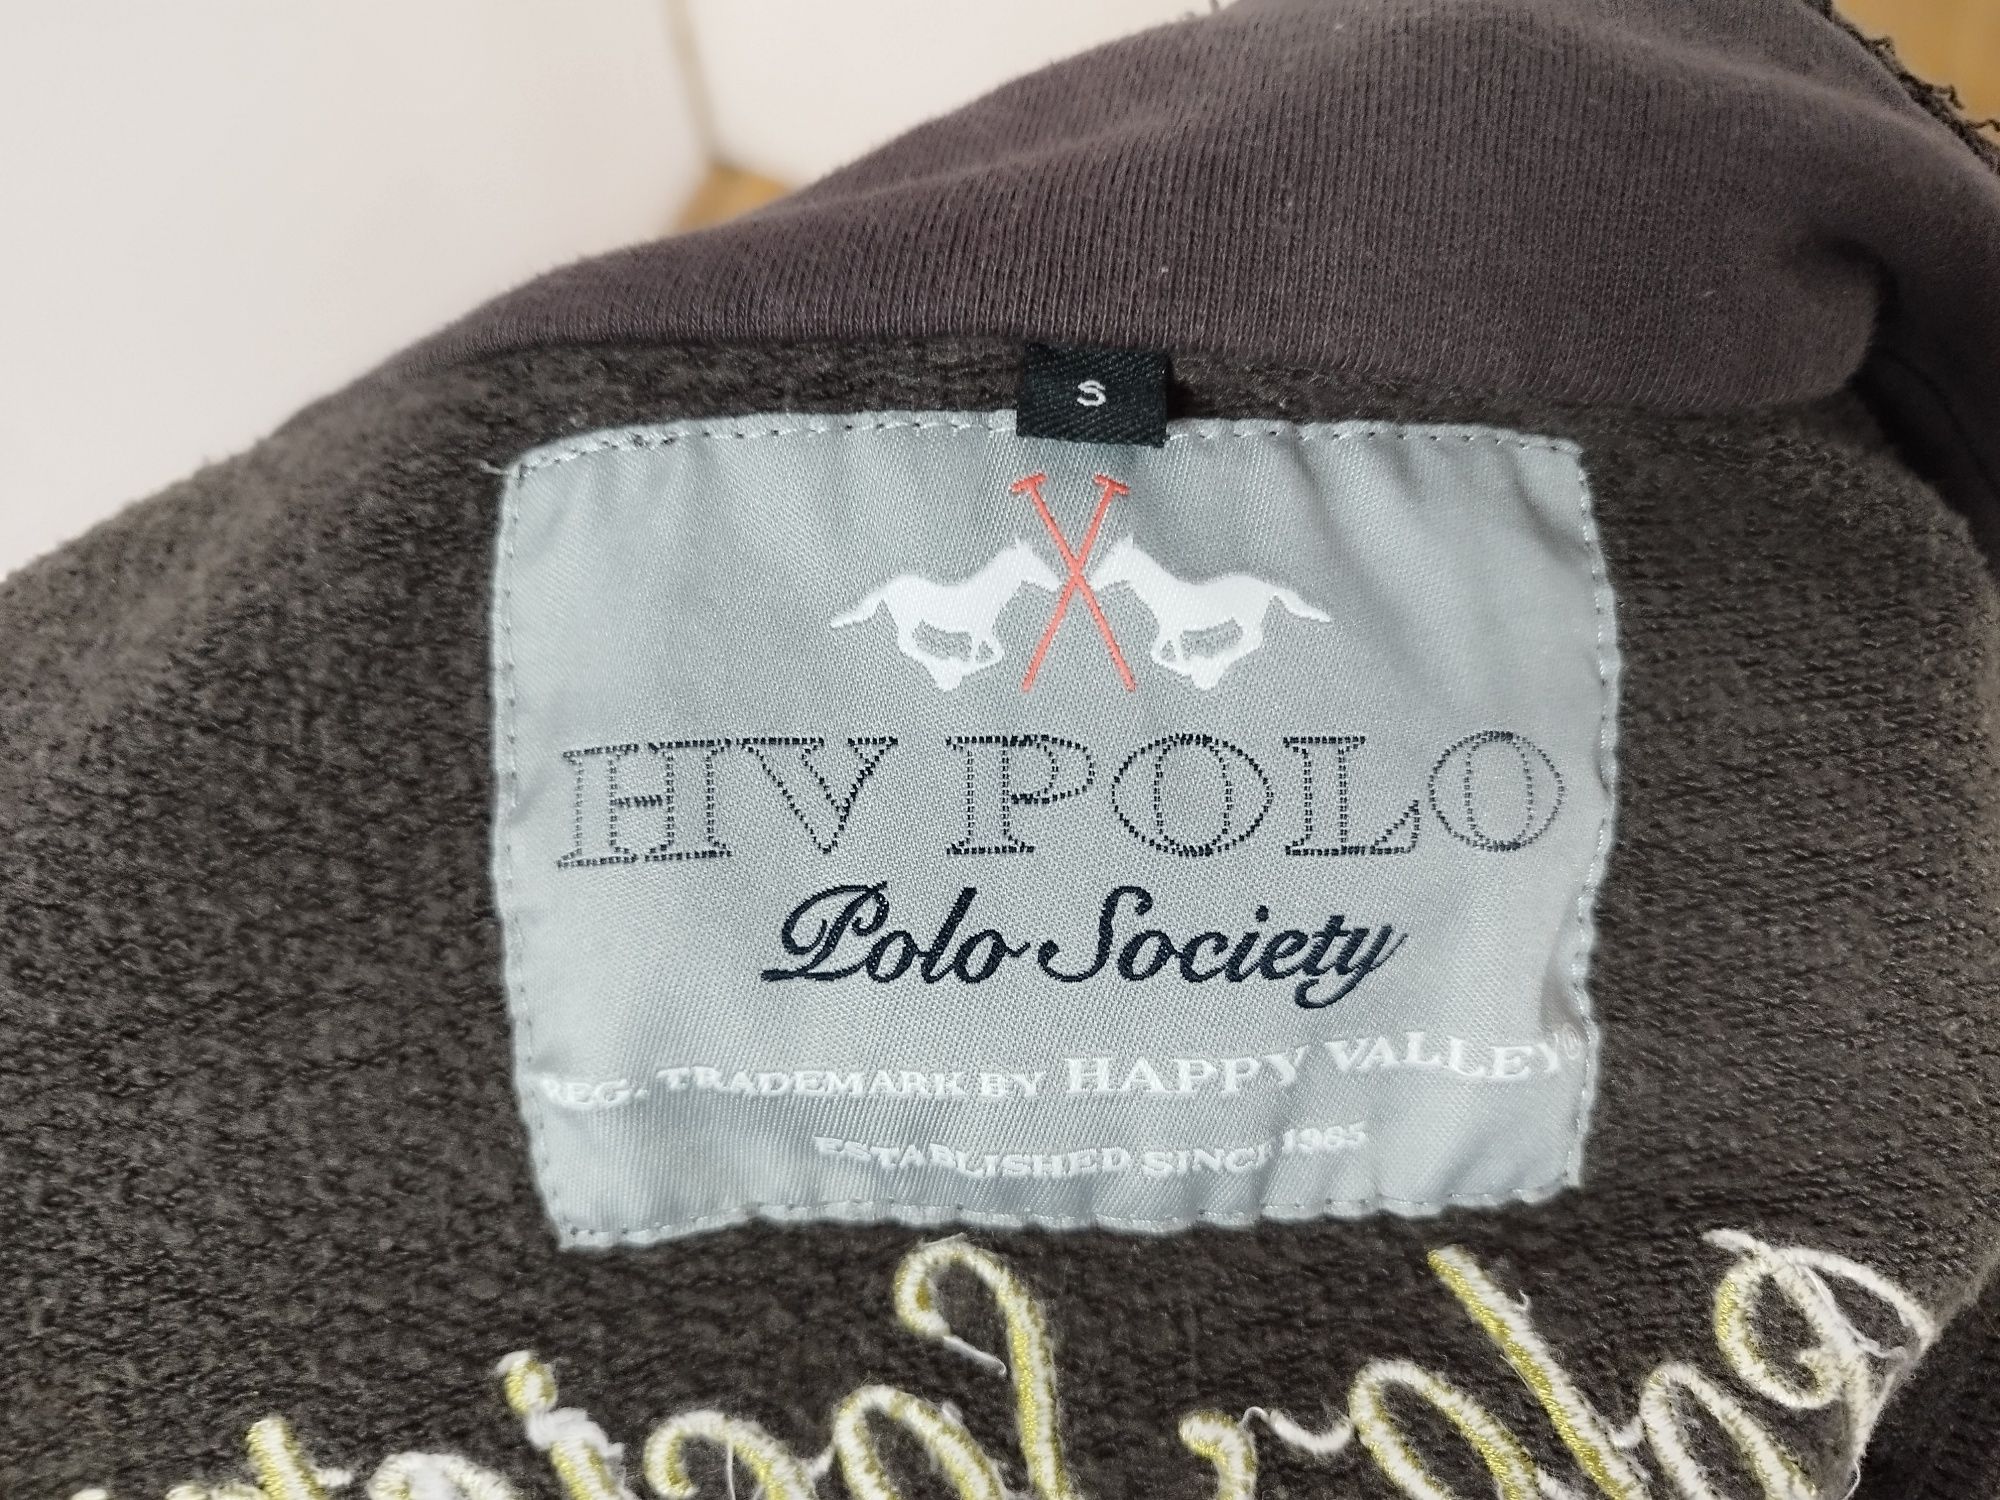 Jacheta Oficială Polo Society - echitatie